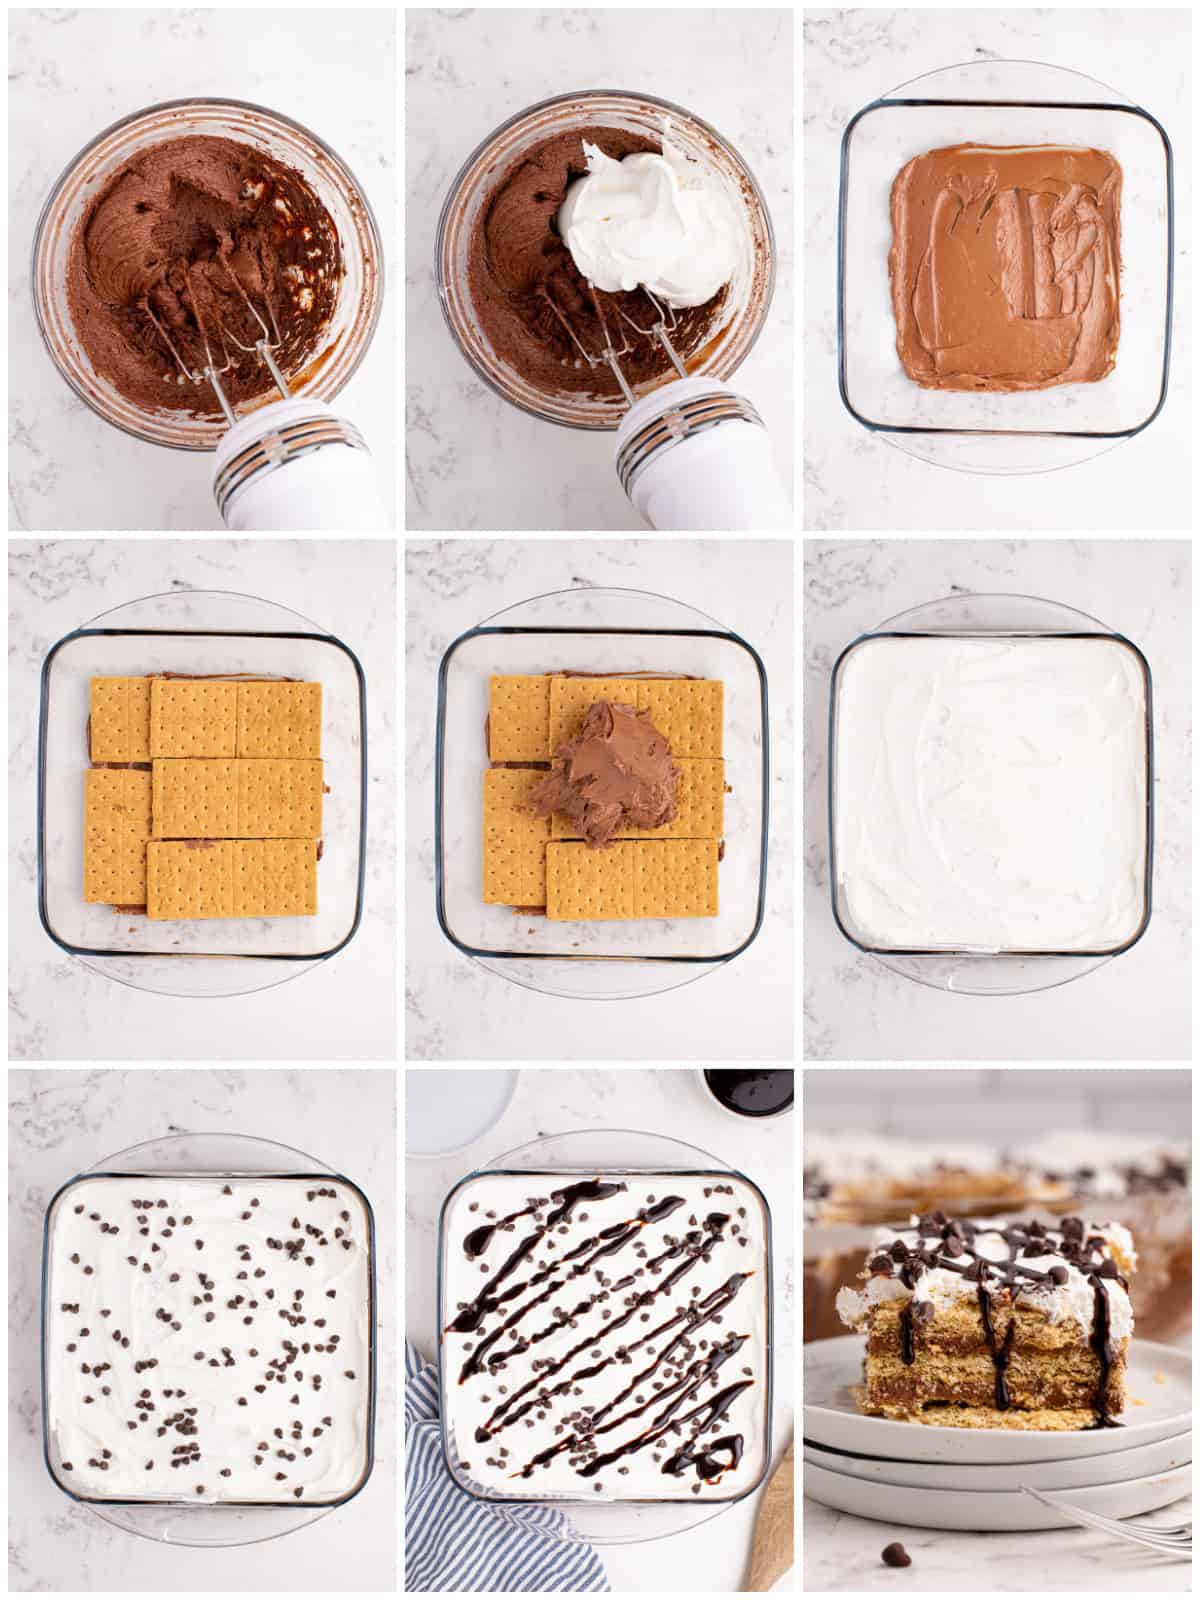 Step by step photos on how to make Chocolate Icebox Cake.